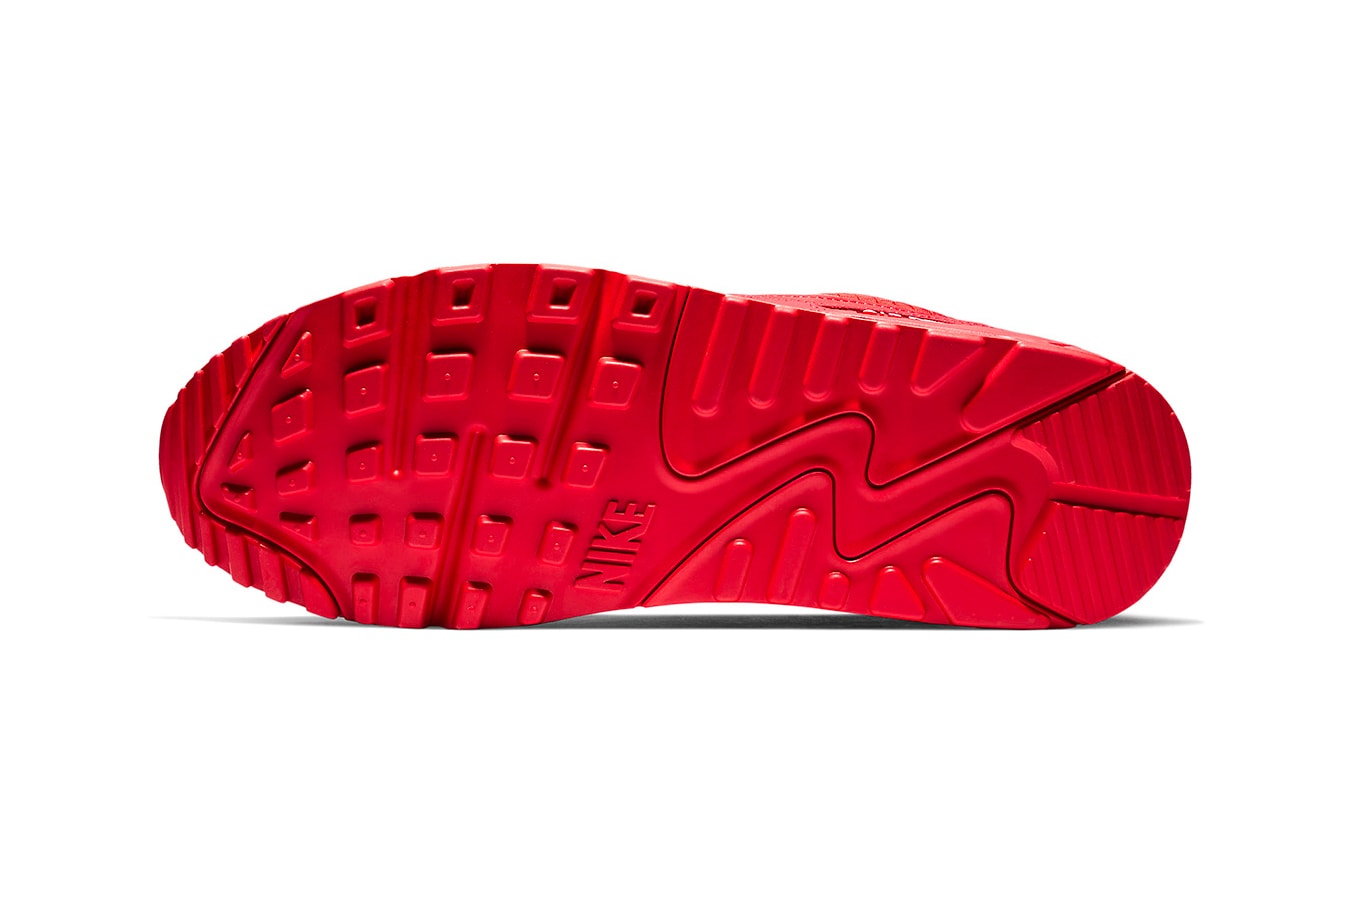 Nike Air Max 90 "All-Red" Release white bold vibrant supreme monotoned